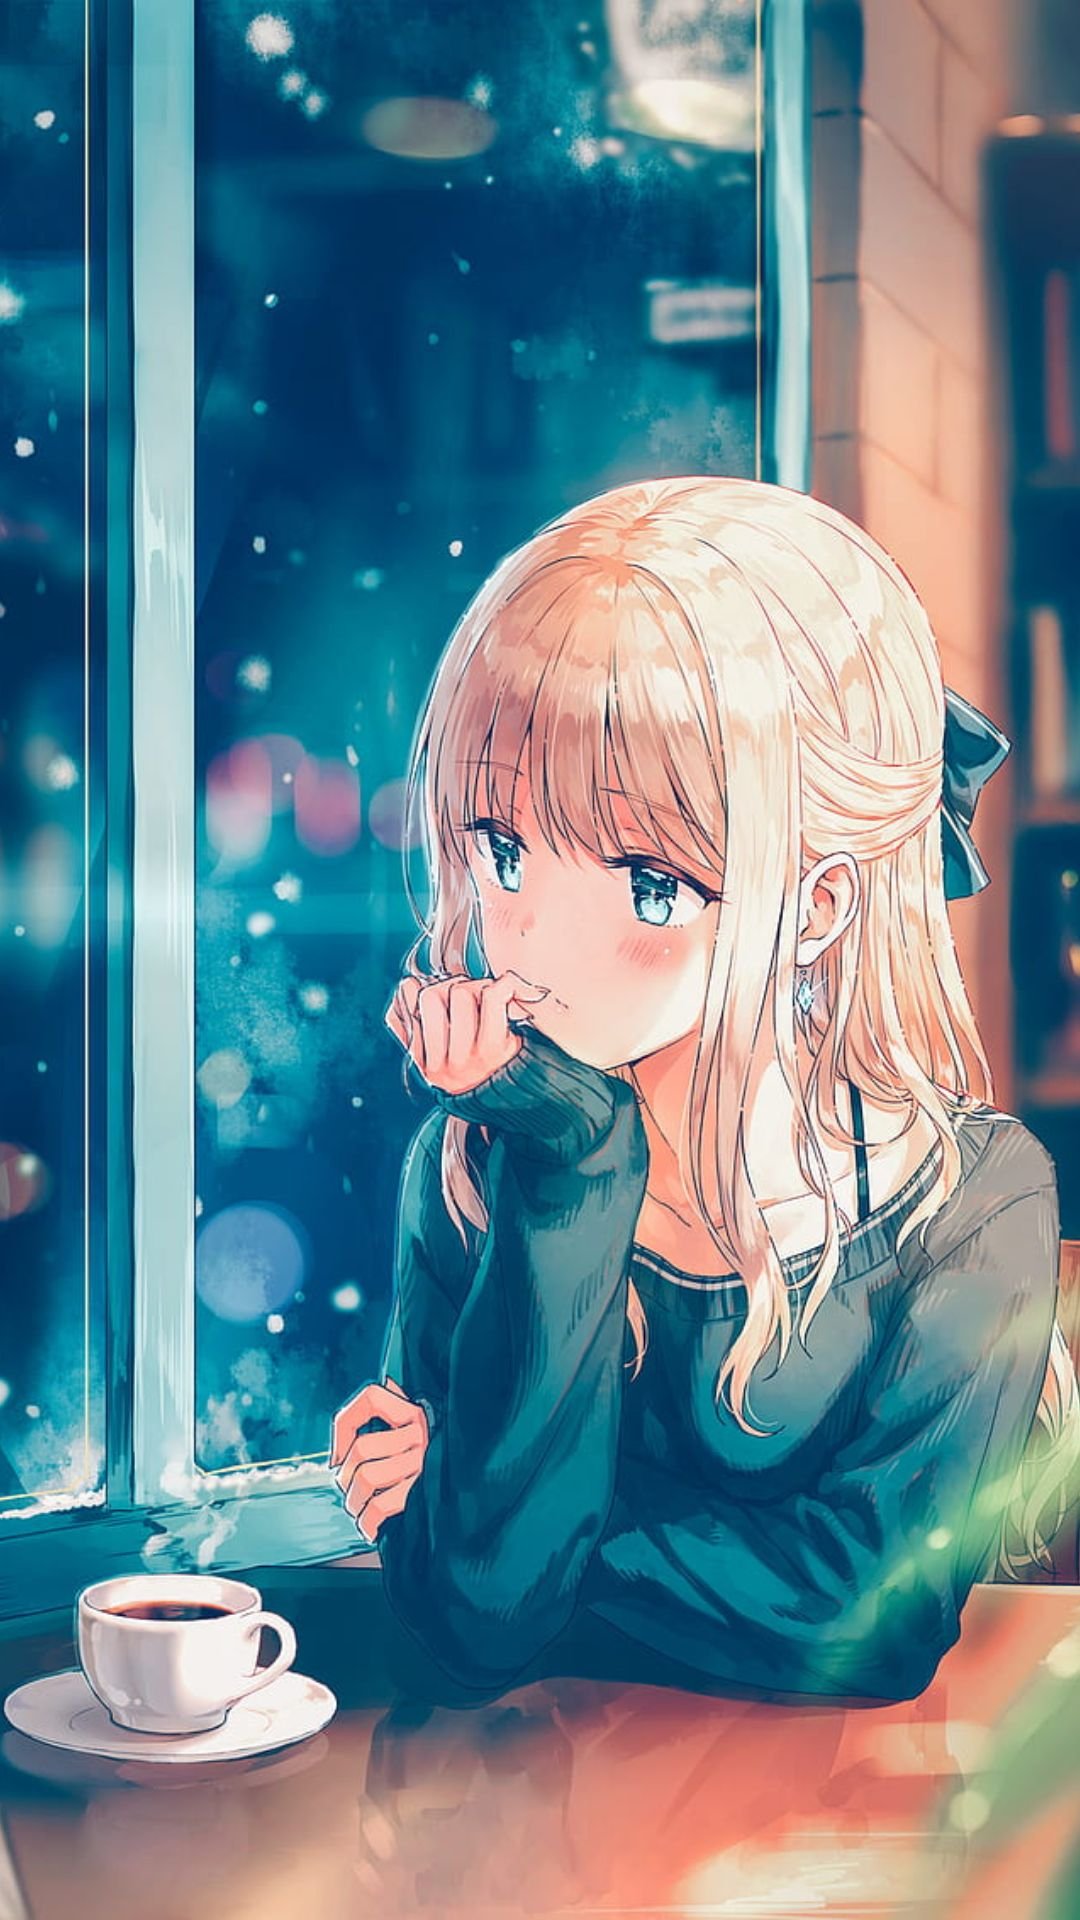 Cute Anime Girl Wallpaper Download